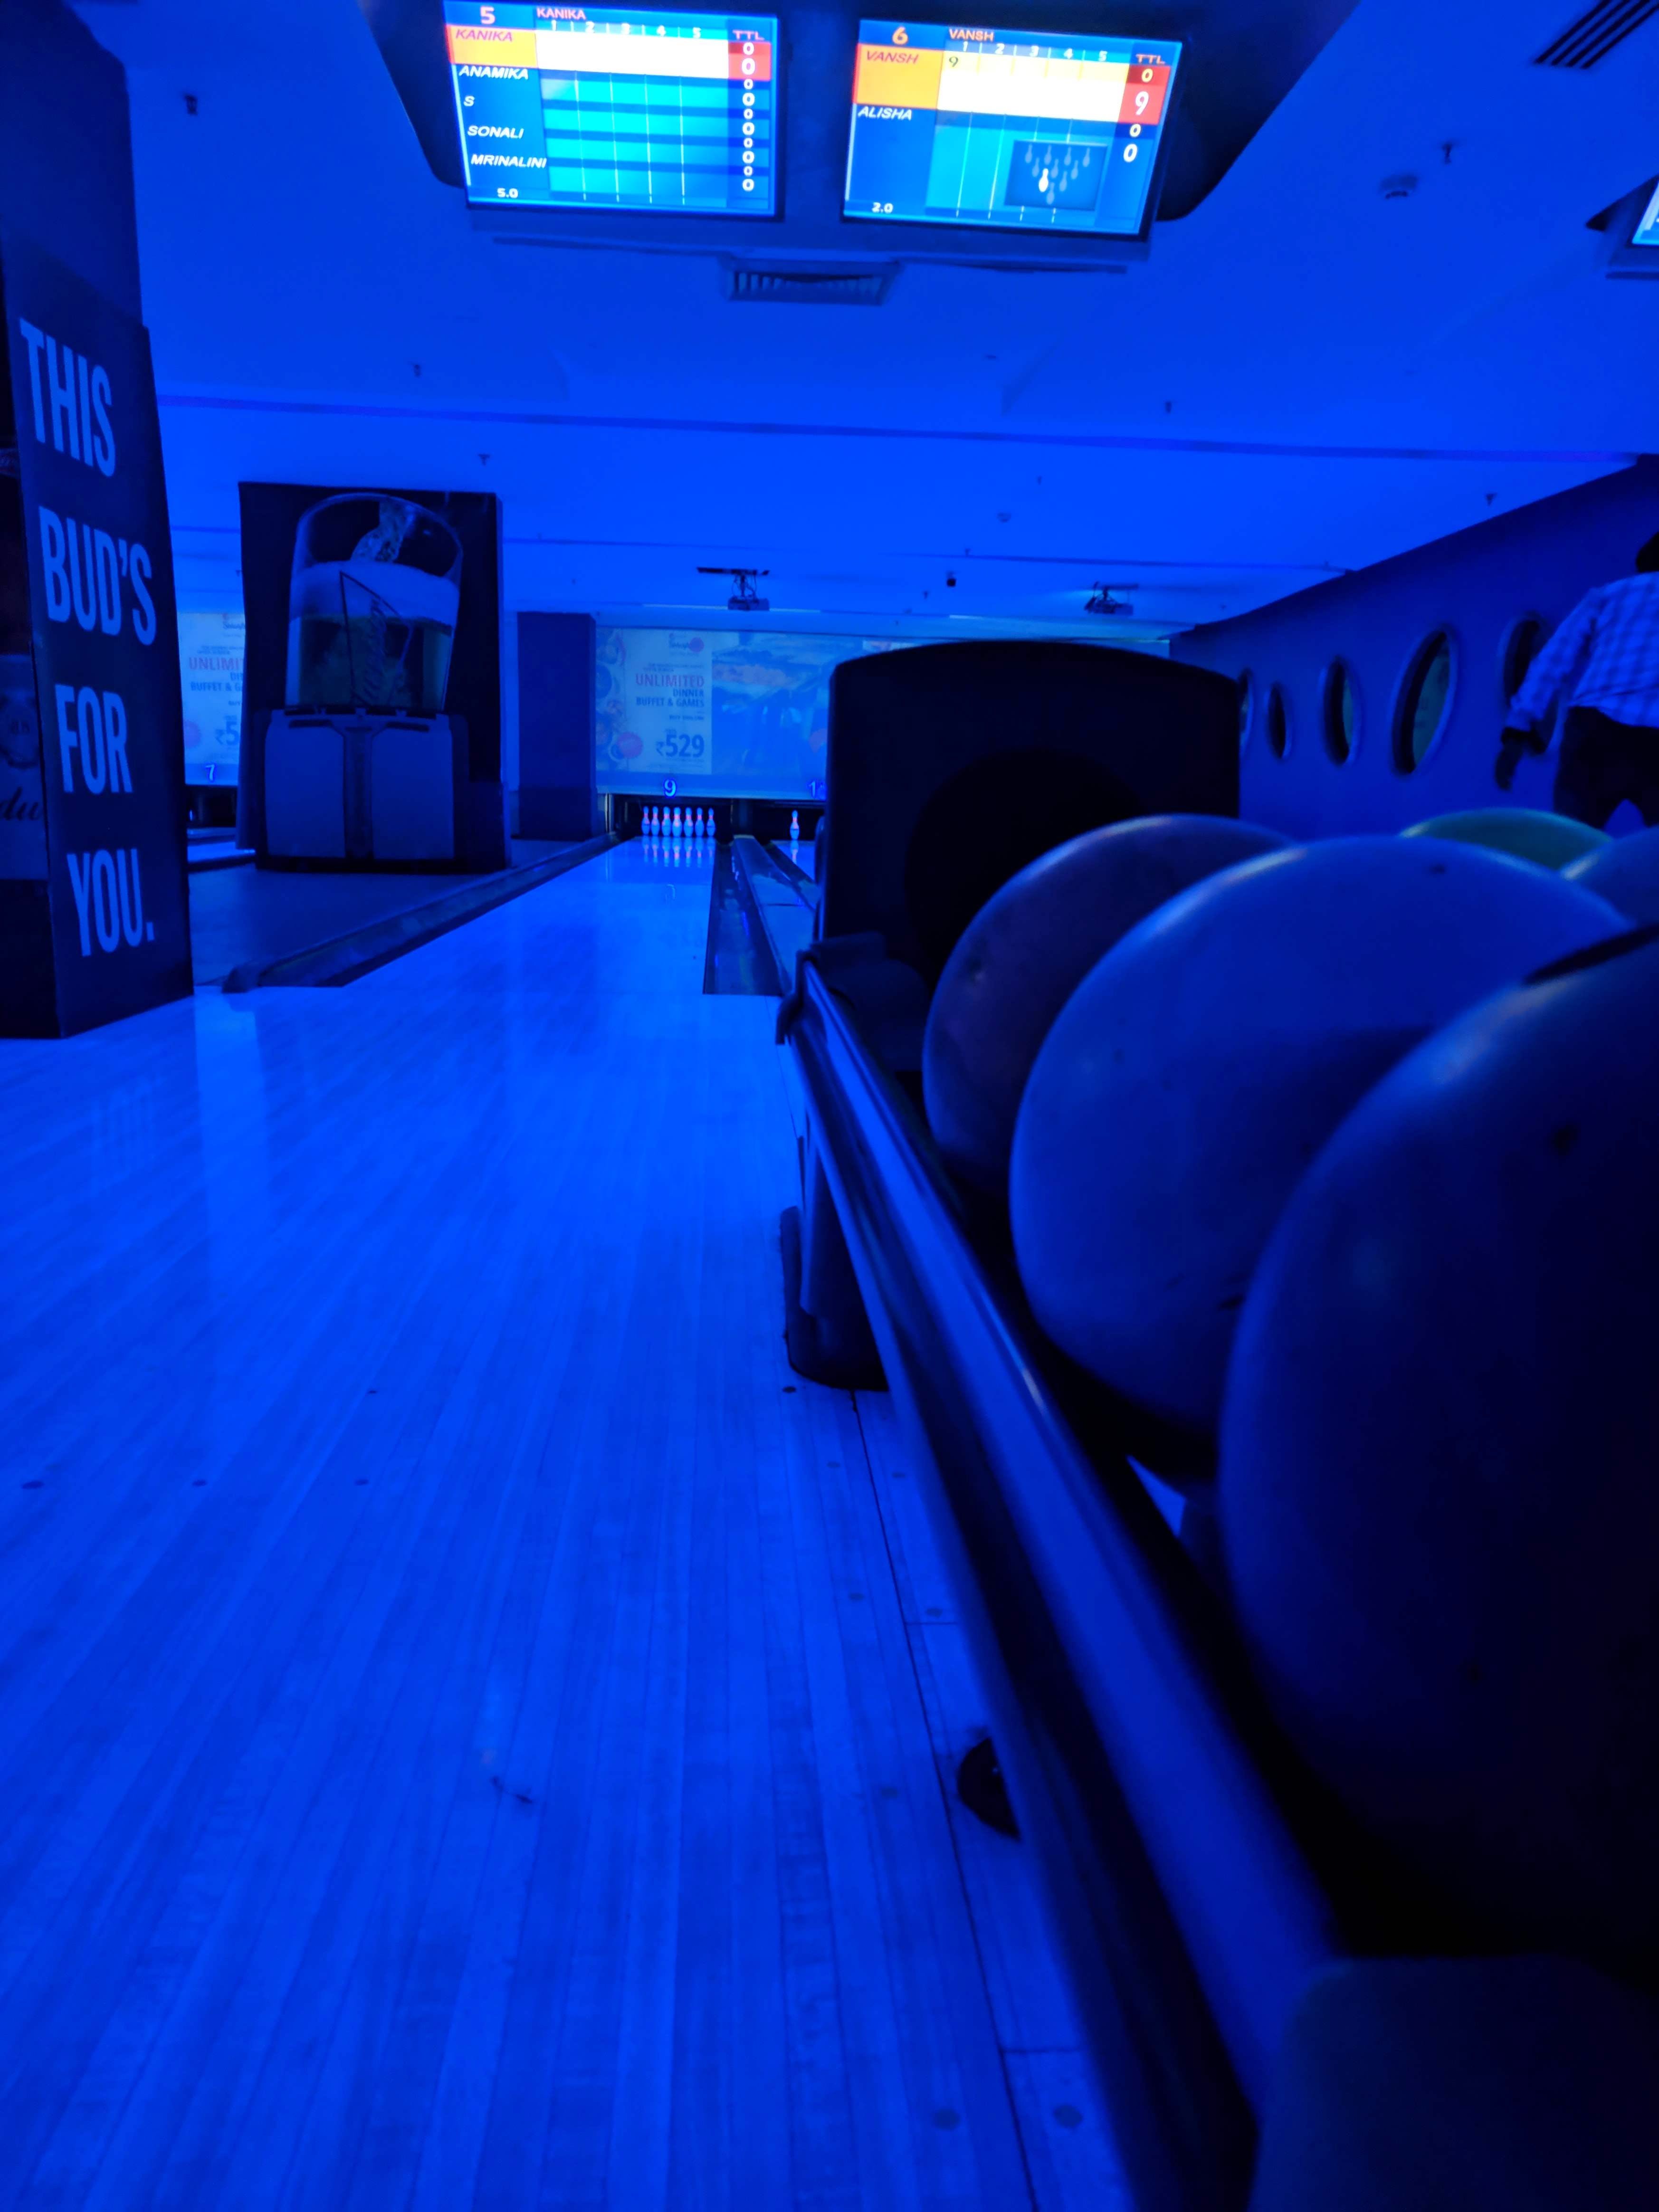 UV bowling area of Smaah